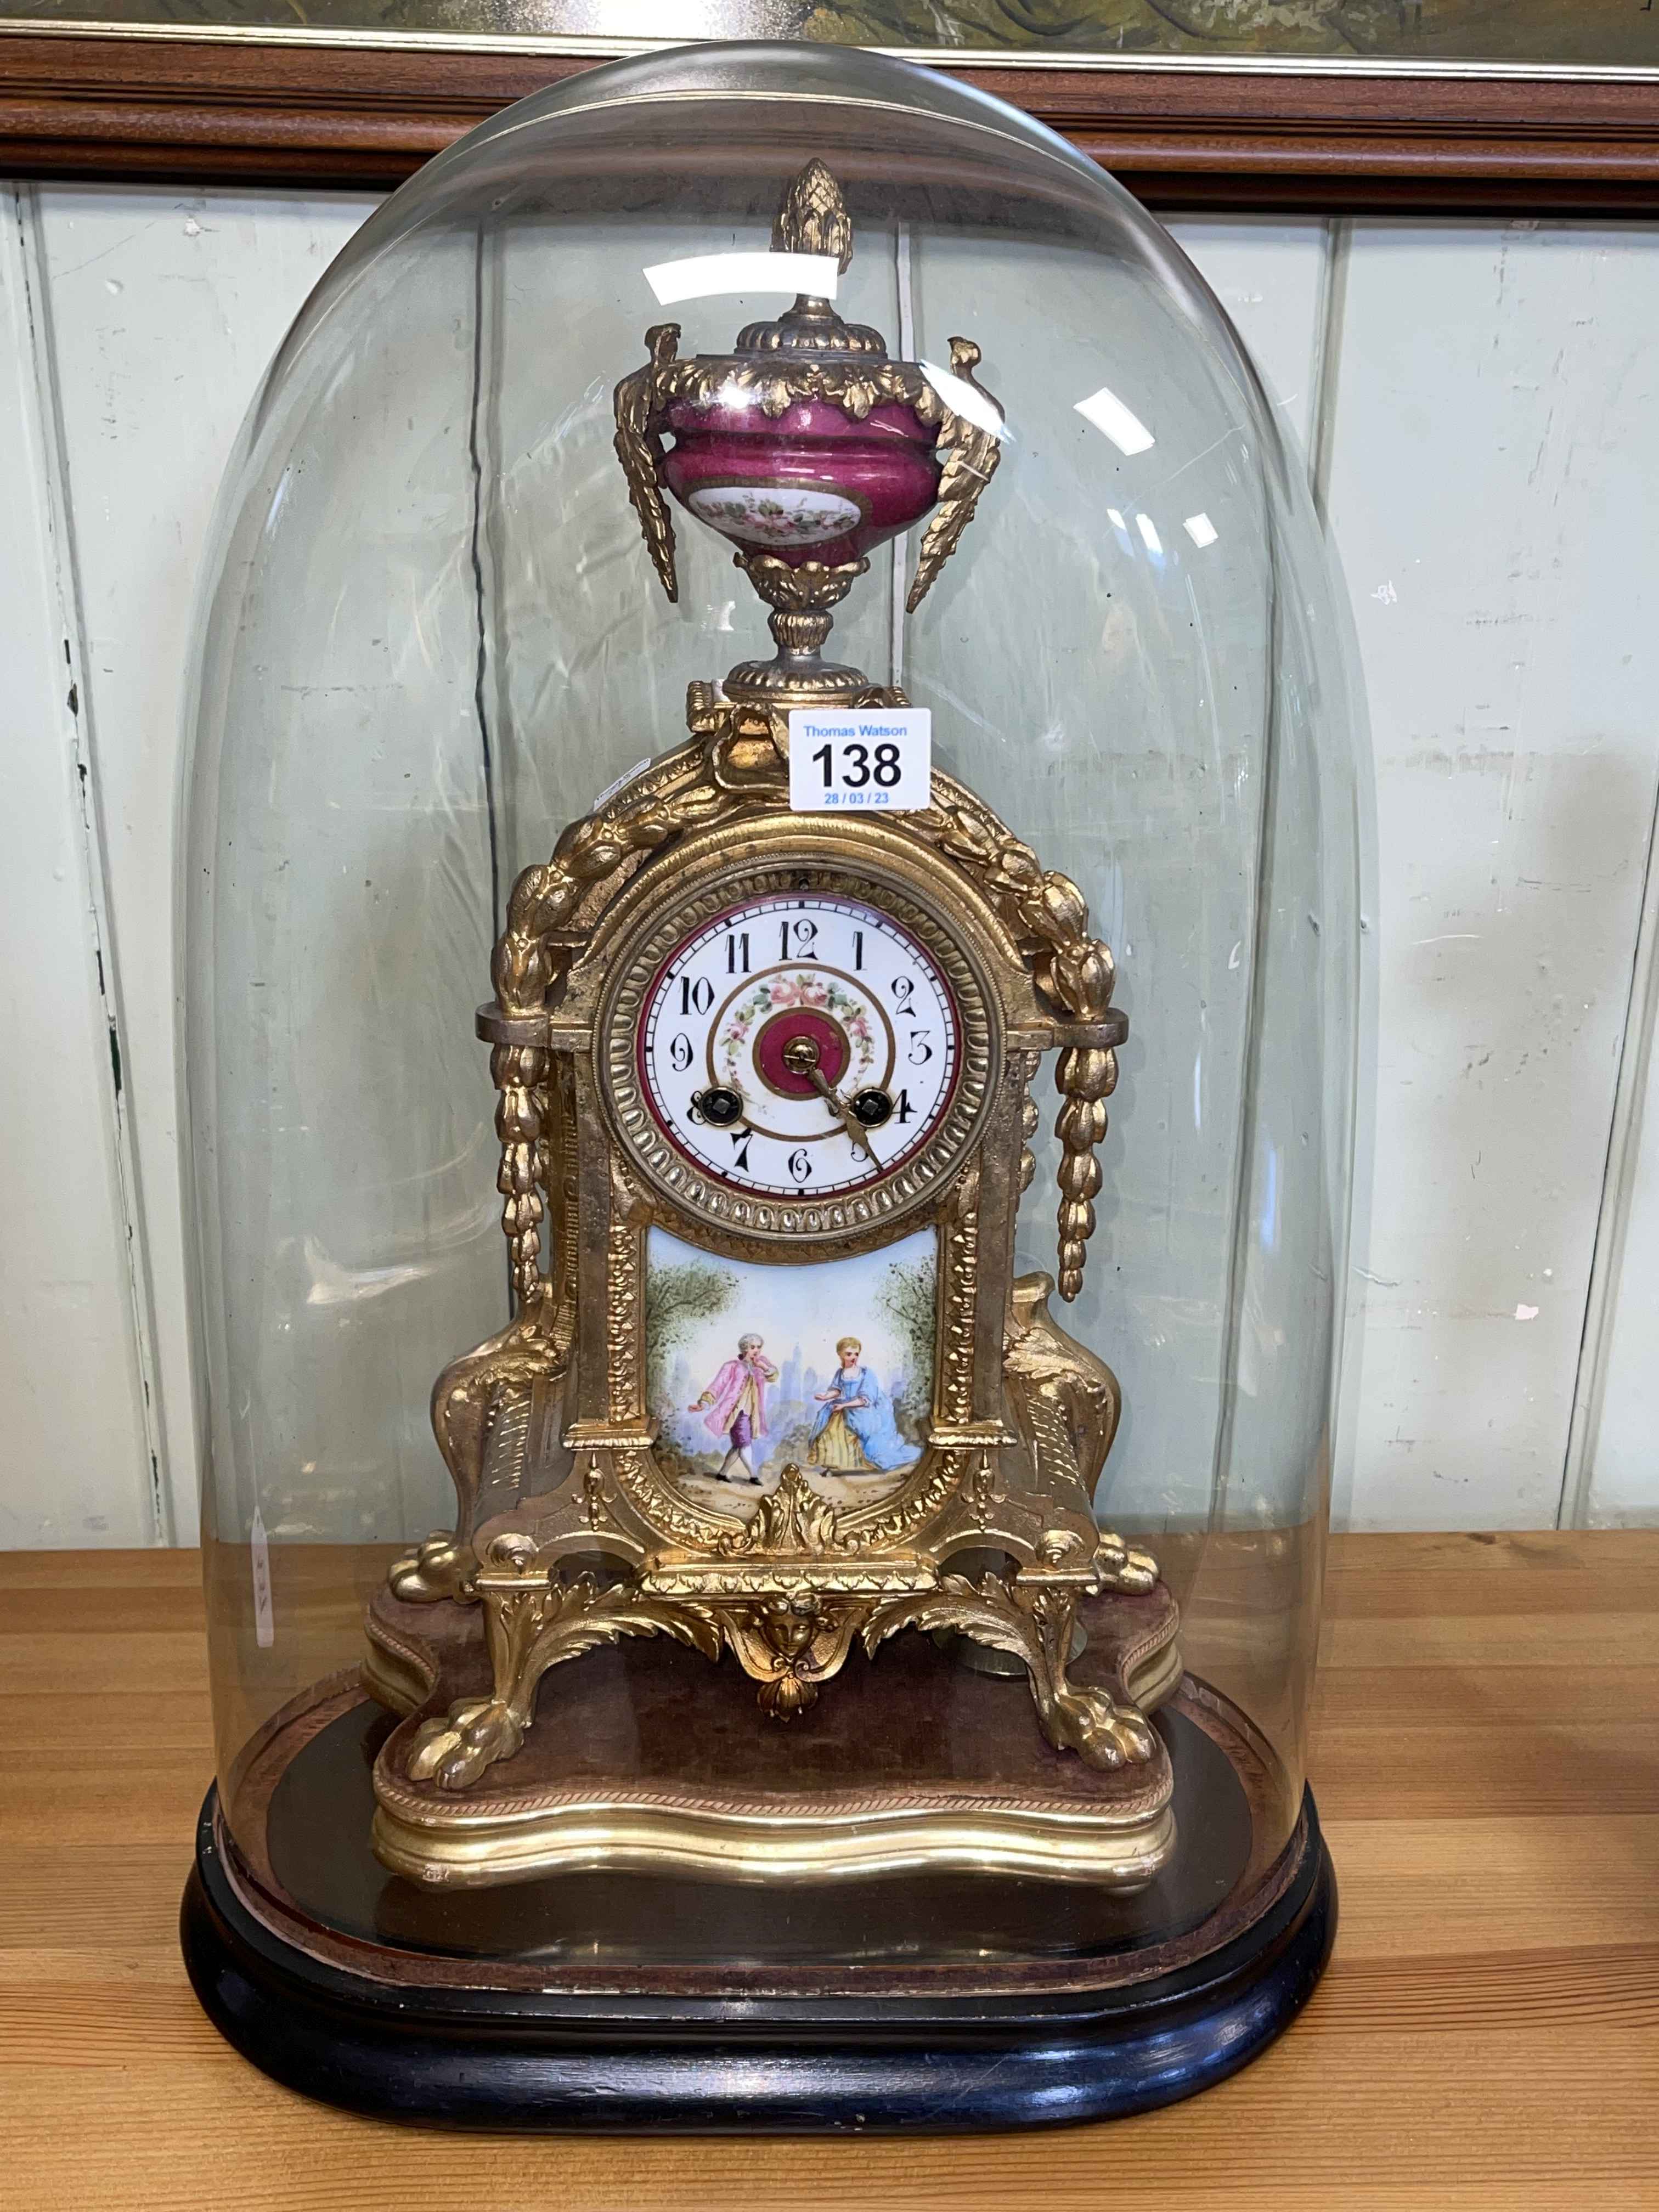 French ornate gilt metal mantel clock with enamel panel depicting classical scene below enamel dial